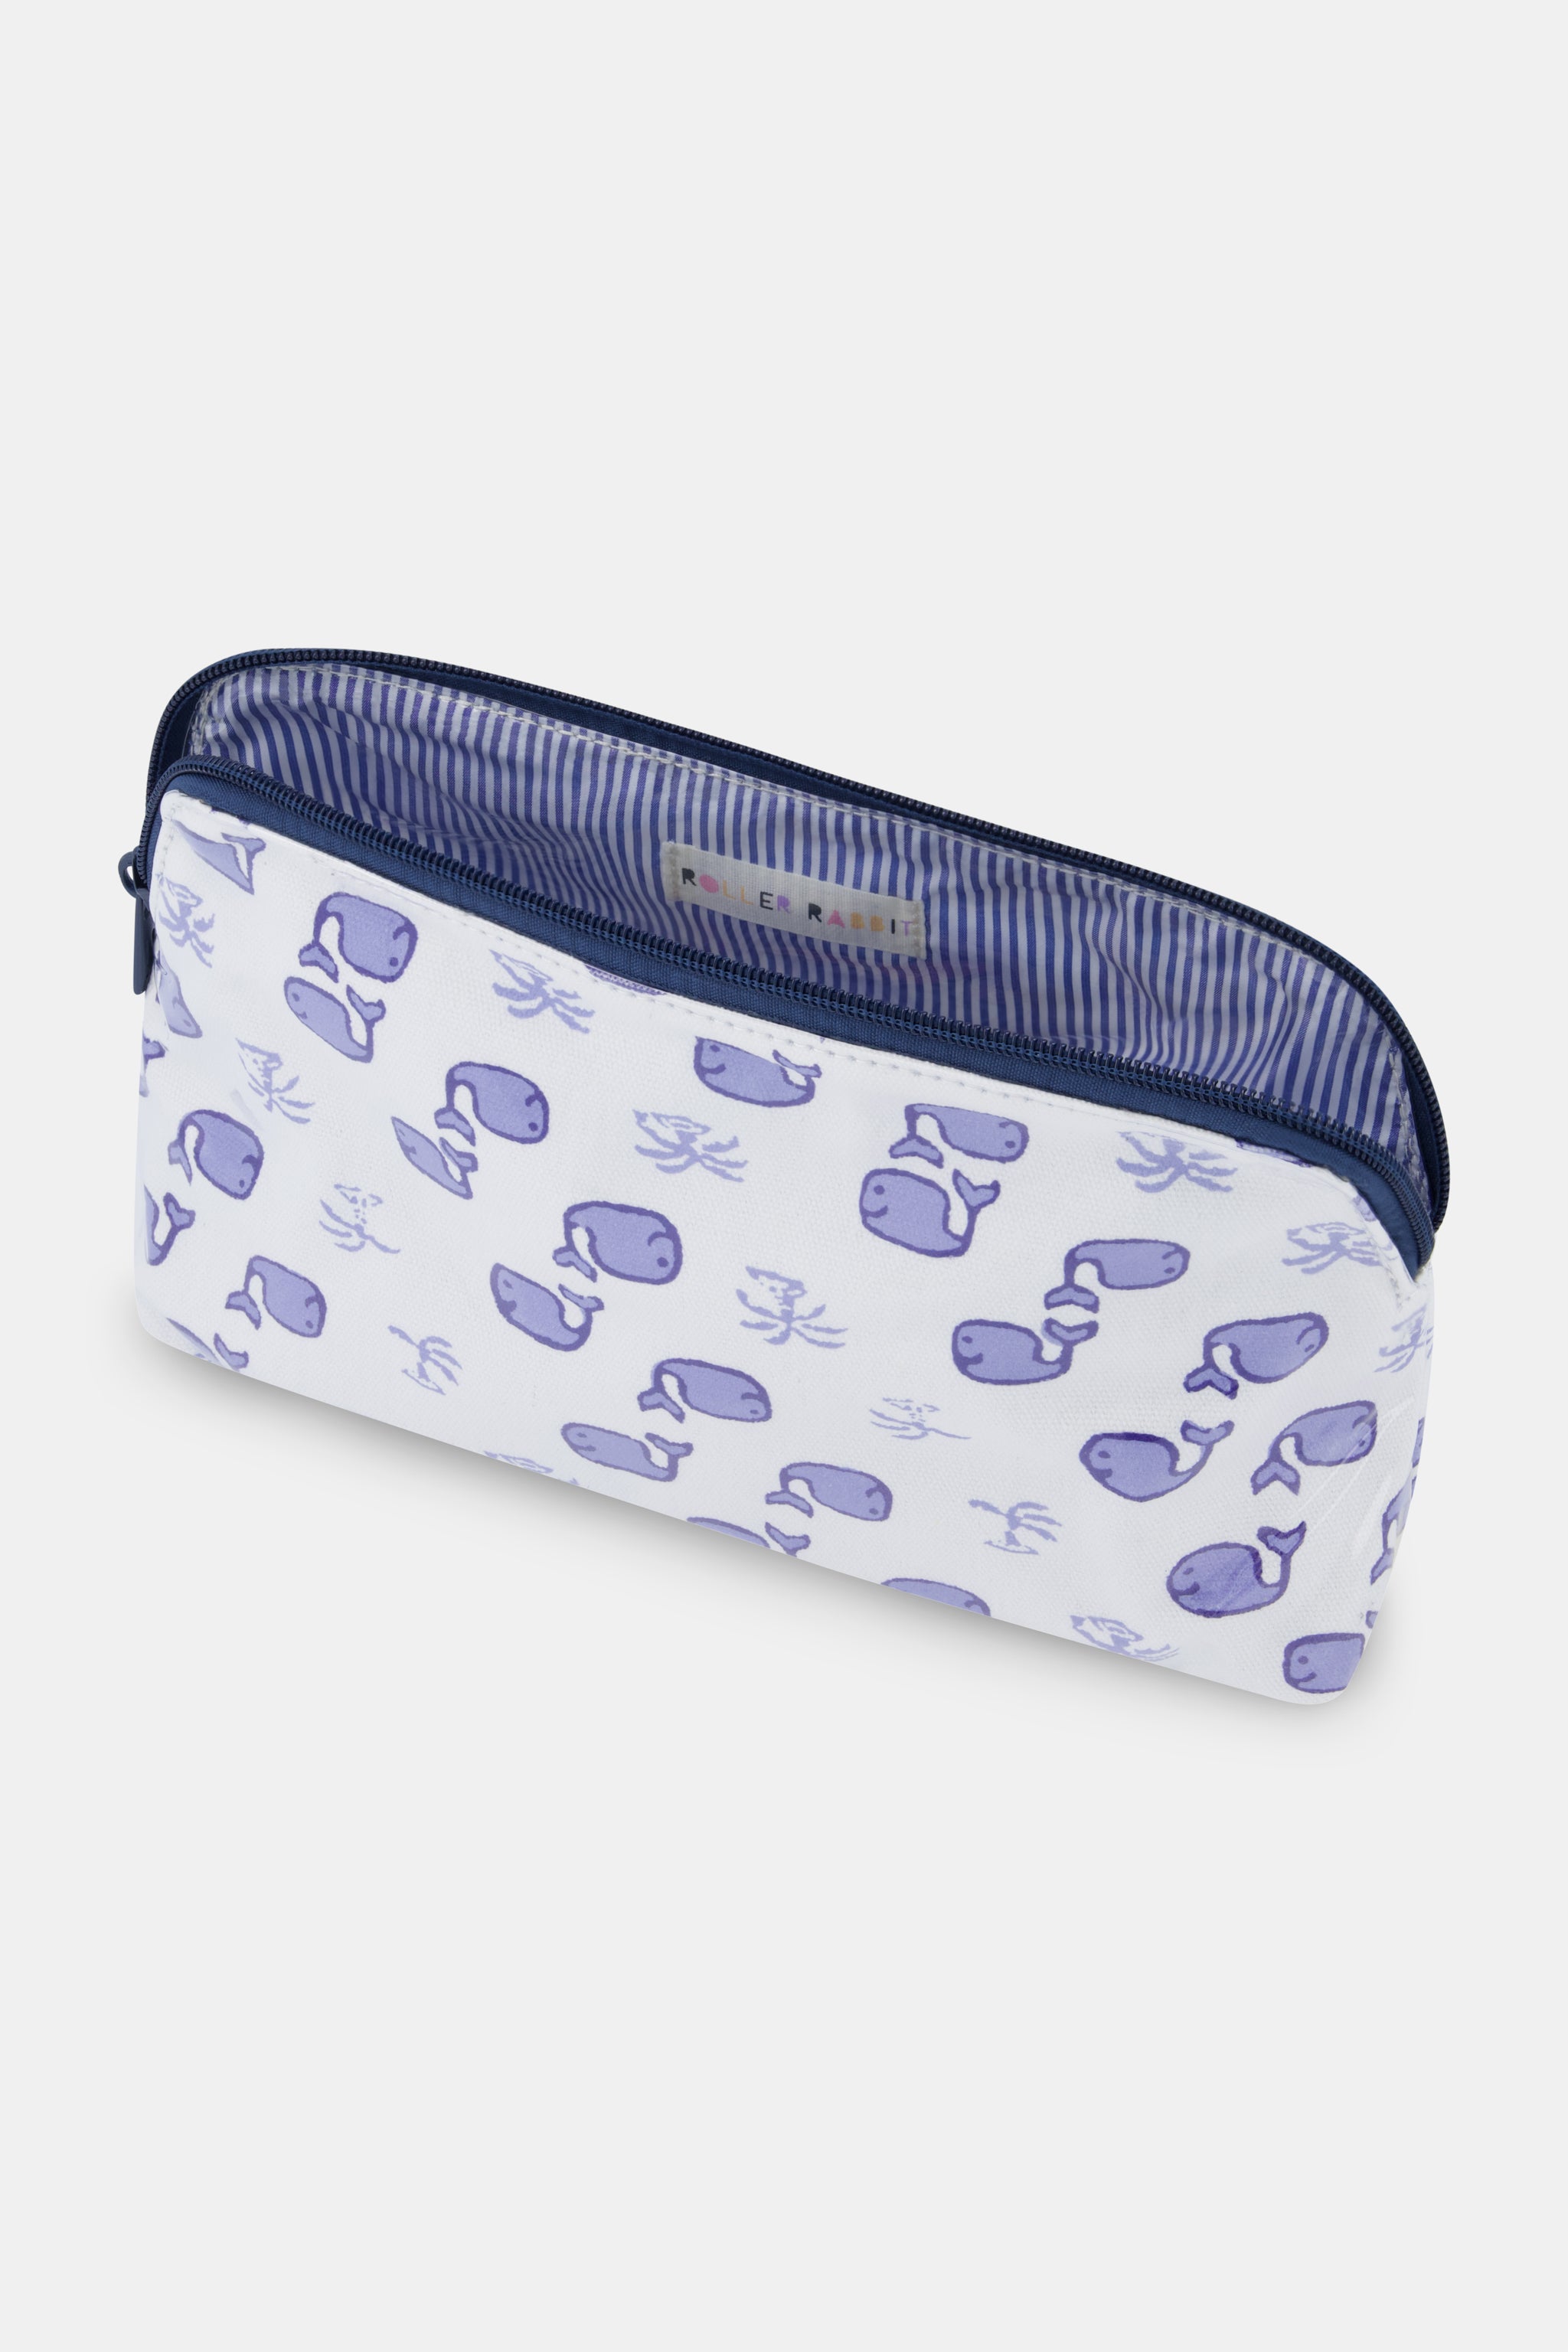 Moby Makeup Bag | Roller Rabbit